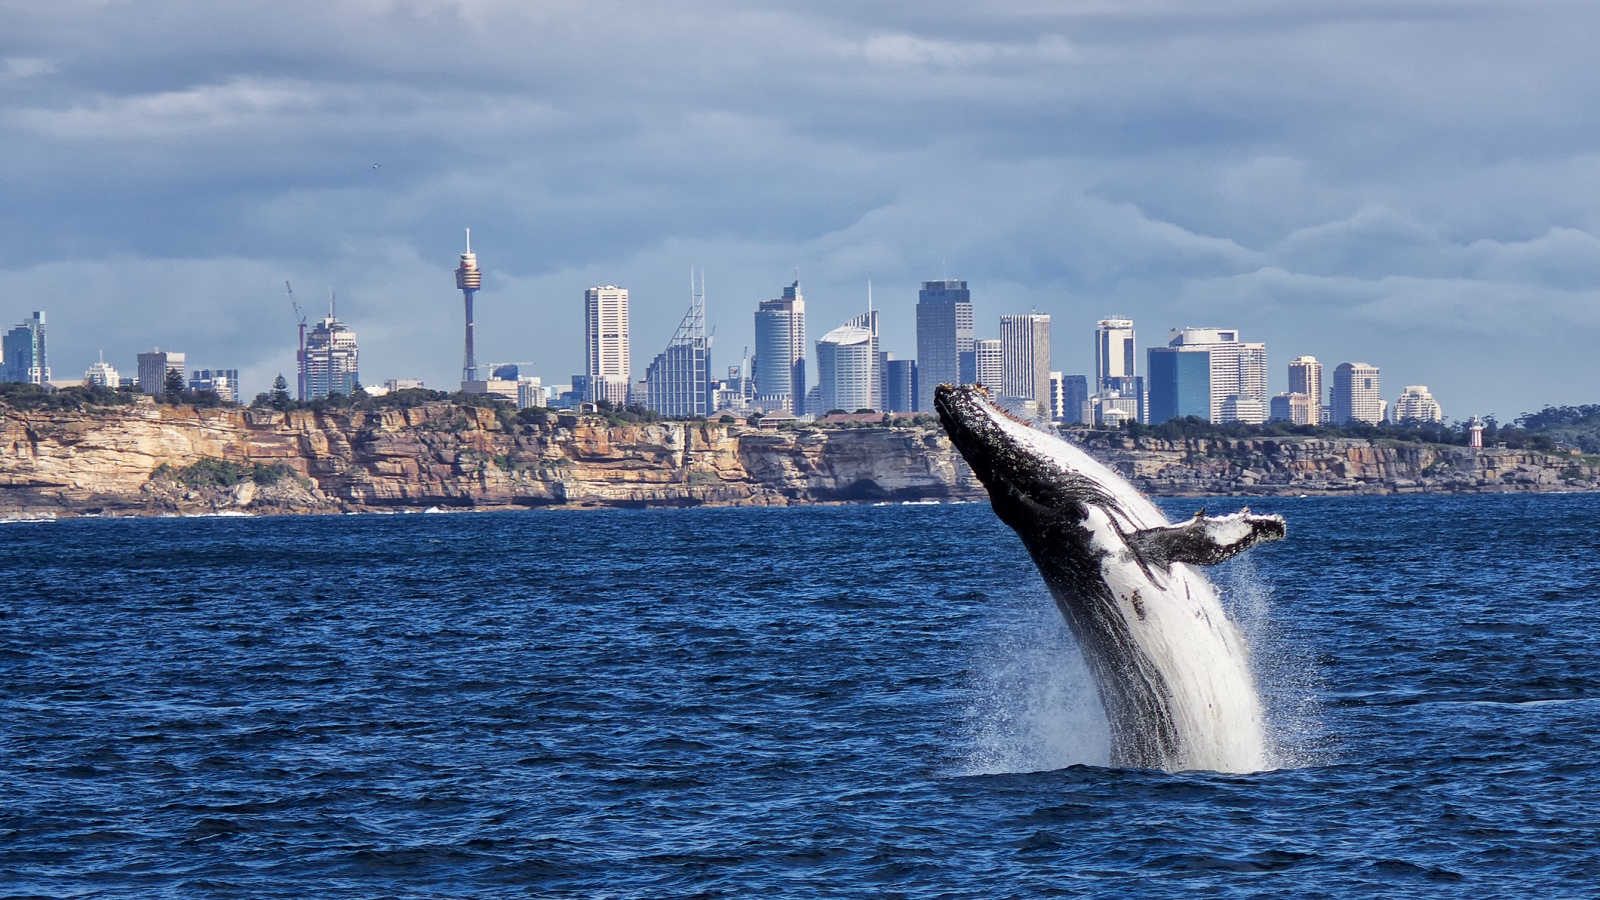 breaching humpback whale near Sydney Australia